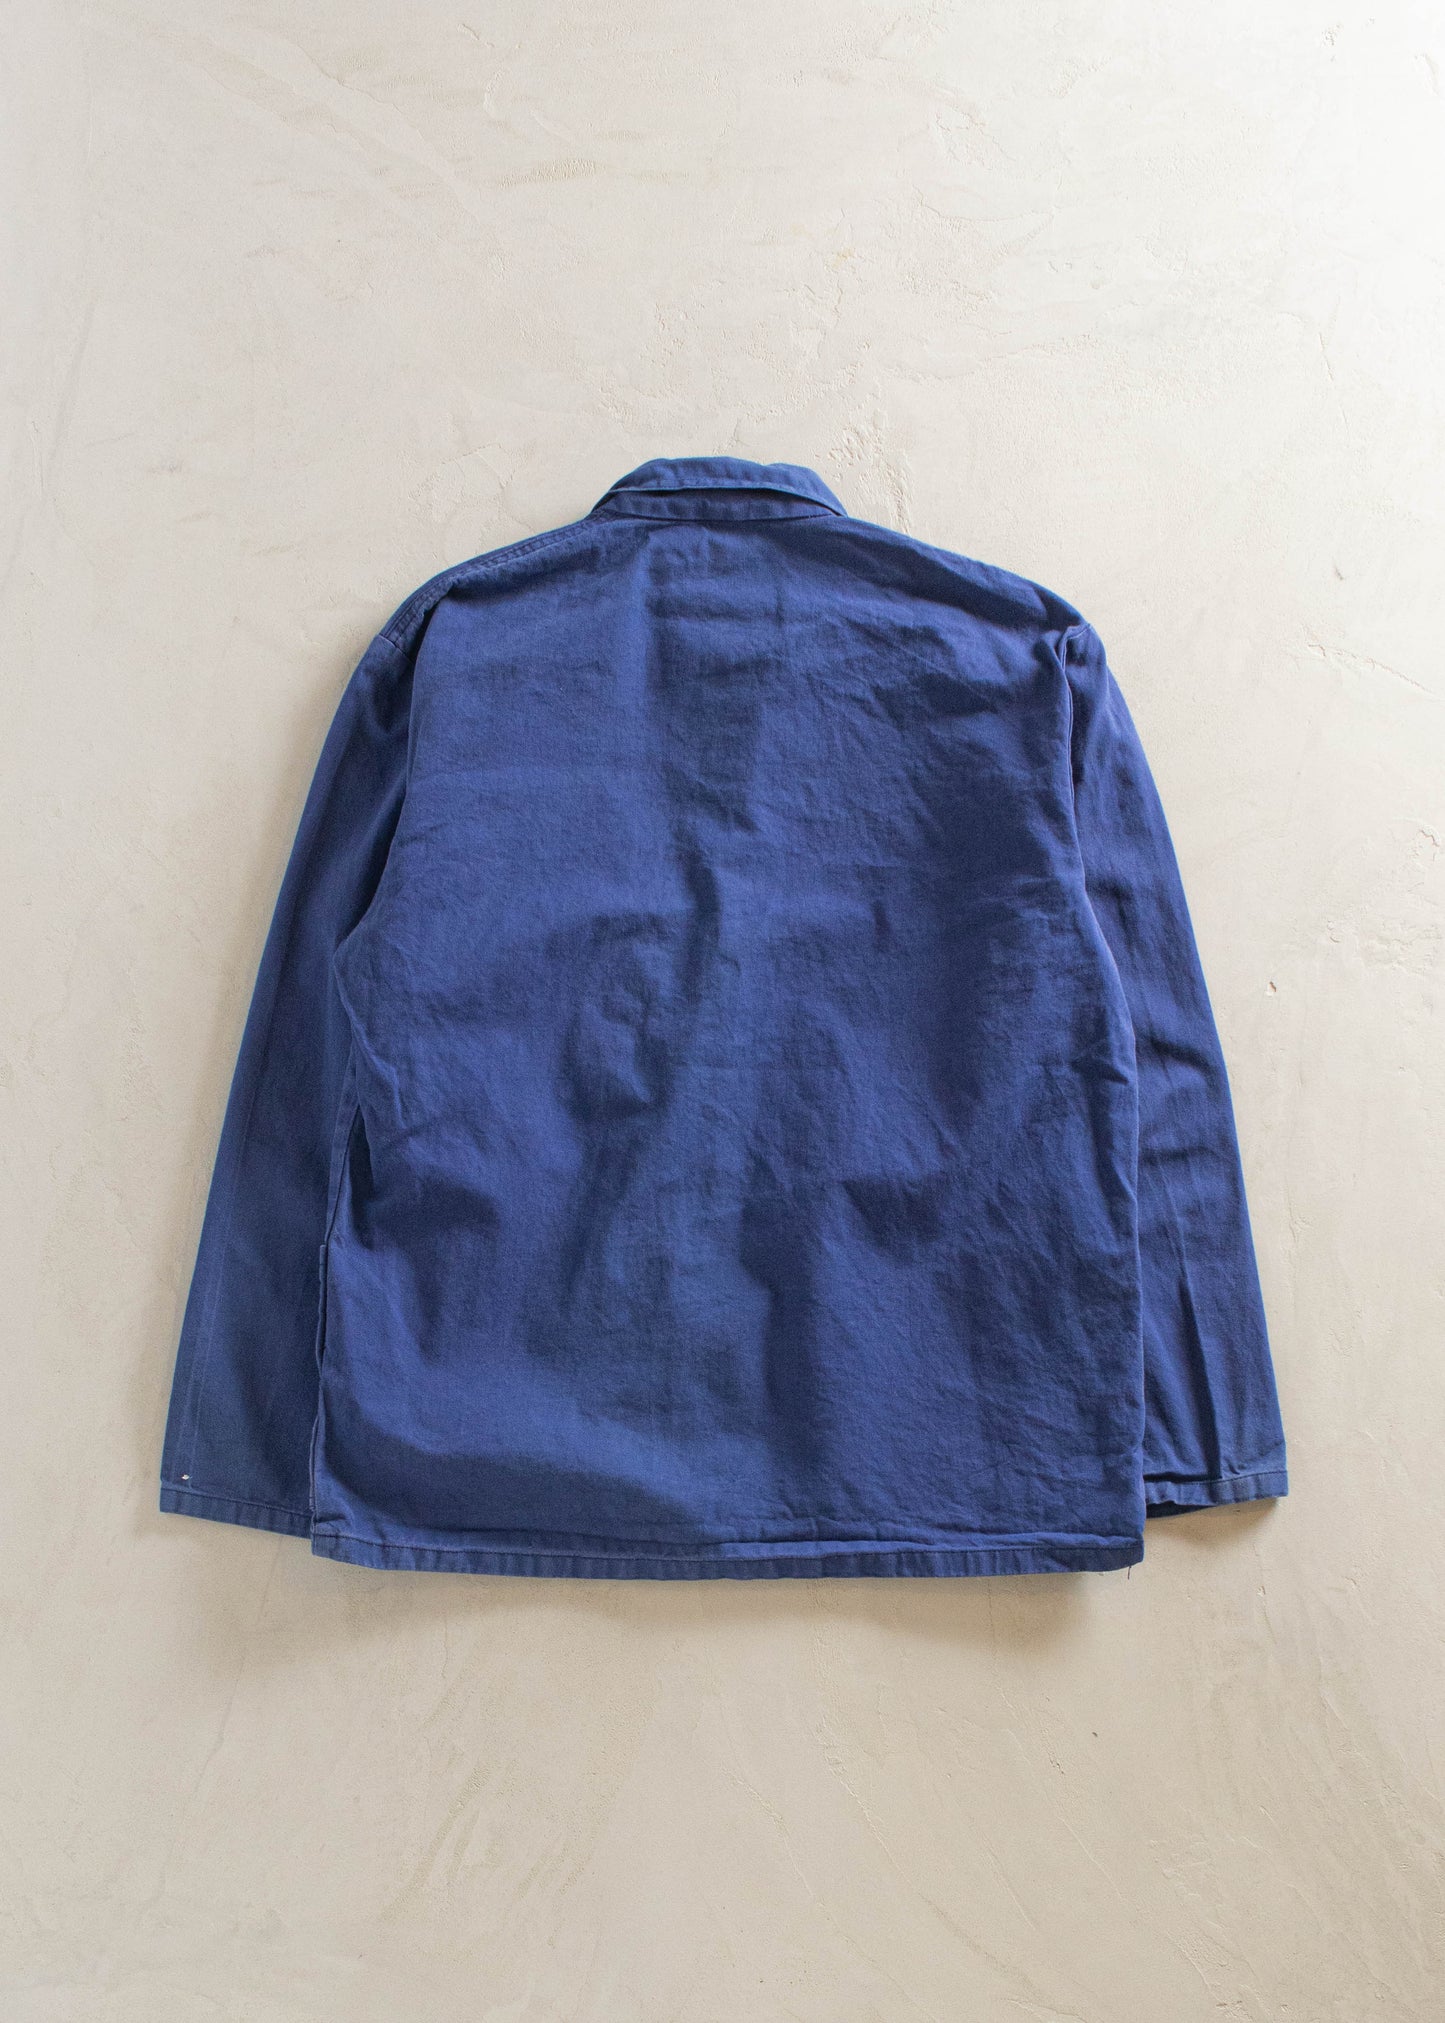 1980s French Workwear Chore Jacket Size L/XL